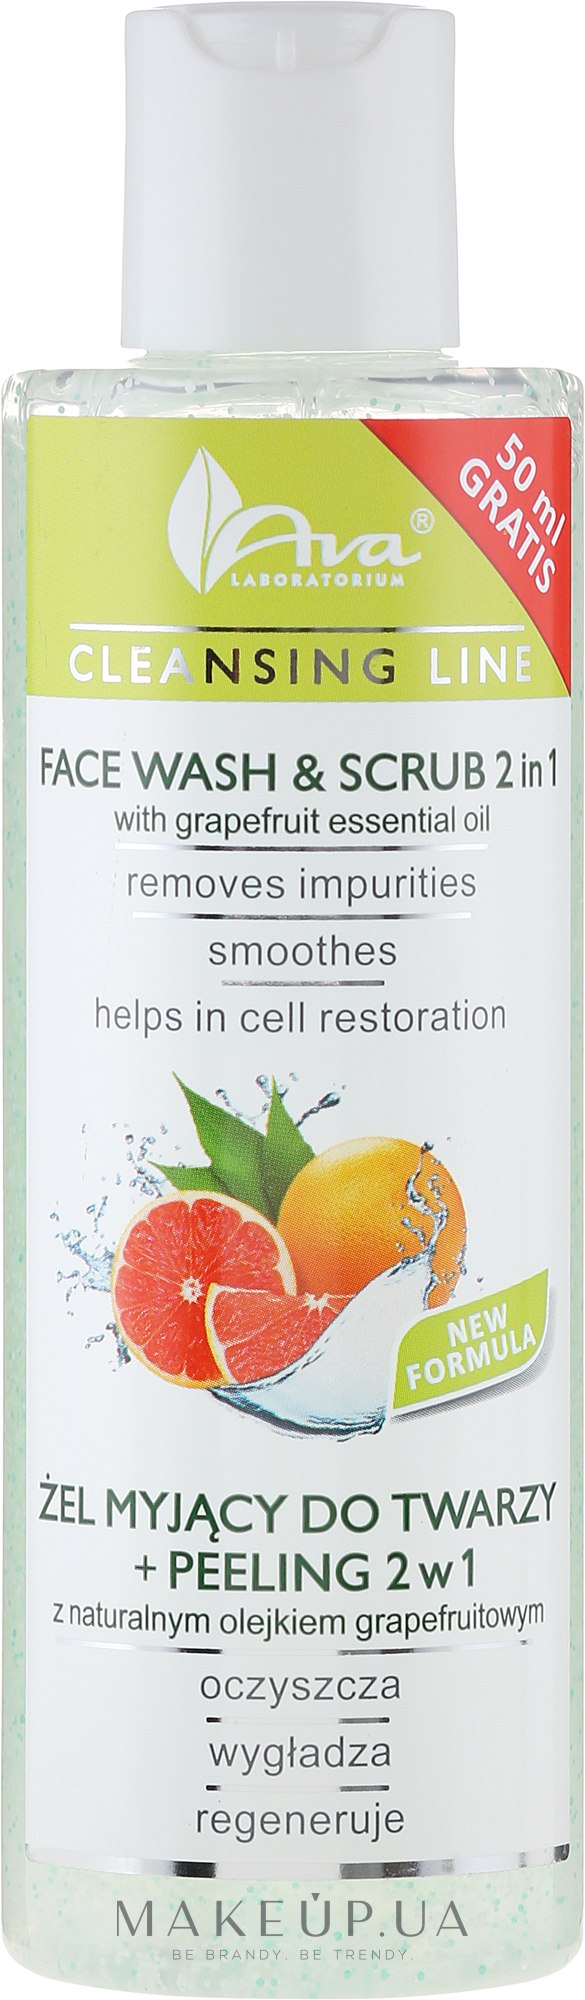 Очищаючий гель + скраб 2 в 1 з грейпфрутовим маслом - Ava Laboratorium Cleansing Line Face Wash & Scrub 2 in 1 — фото 200ml